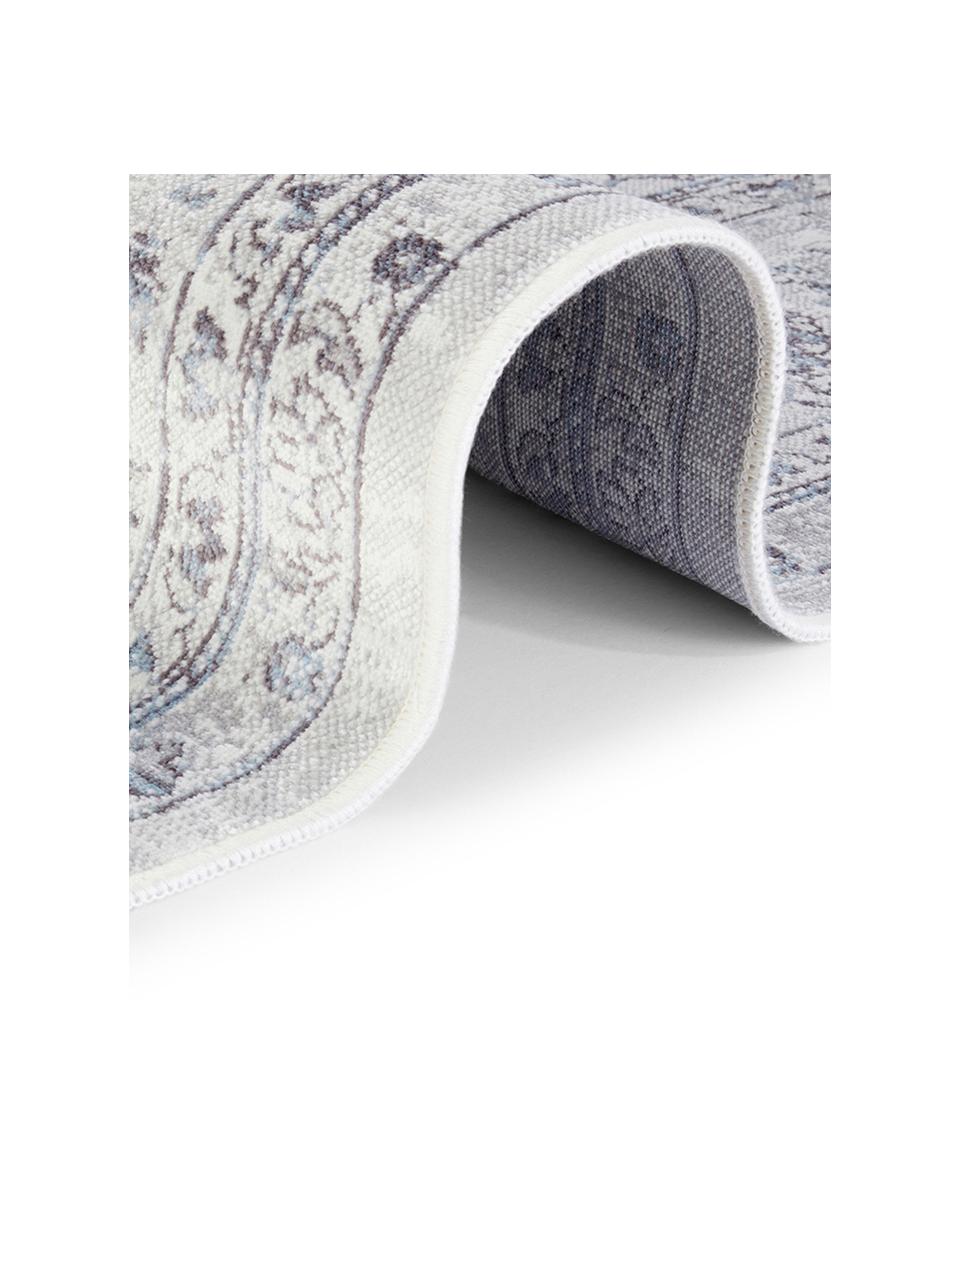 Teppich Medaillon im Vintage Look, Viskose/Baumwolle, 60% Viskose, 40% Baumwolle, Pastellblau, Hellgrau, B 195 x L 300 cm (Größe L)